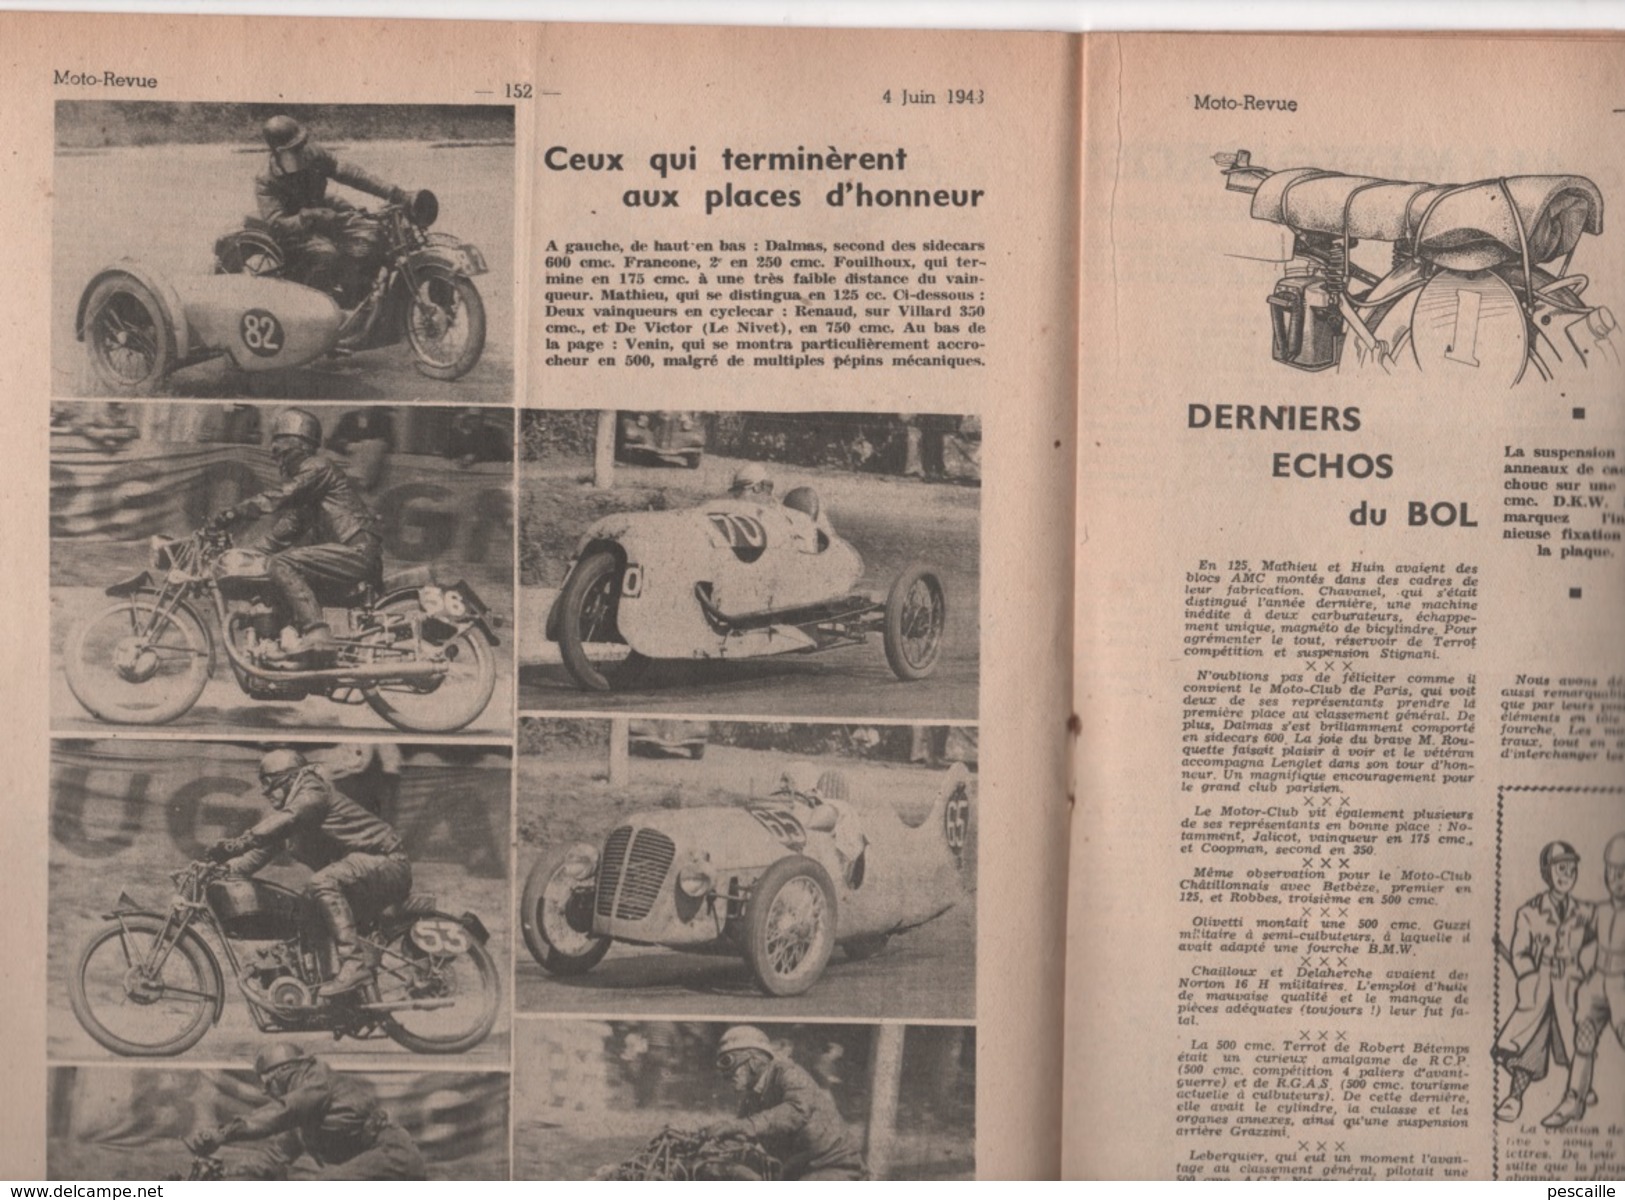 MOTO REVUE 4 06 1948 - MOTO-CROSS DE MONTREUIL - CULASSE DE MOTO - BOL D'OR - MOTO CARROSSEE - RACER 500 - - Moto